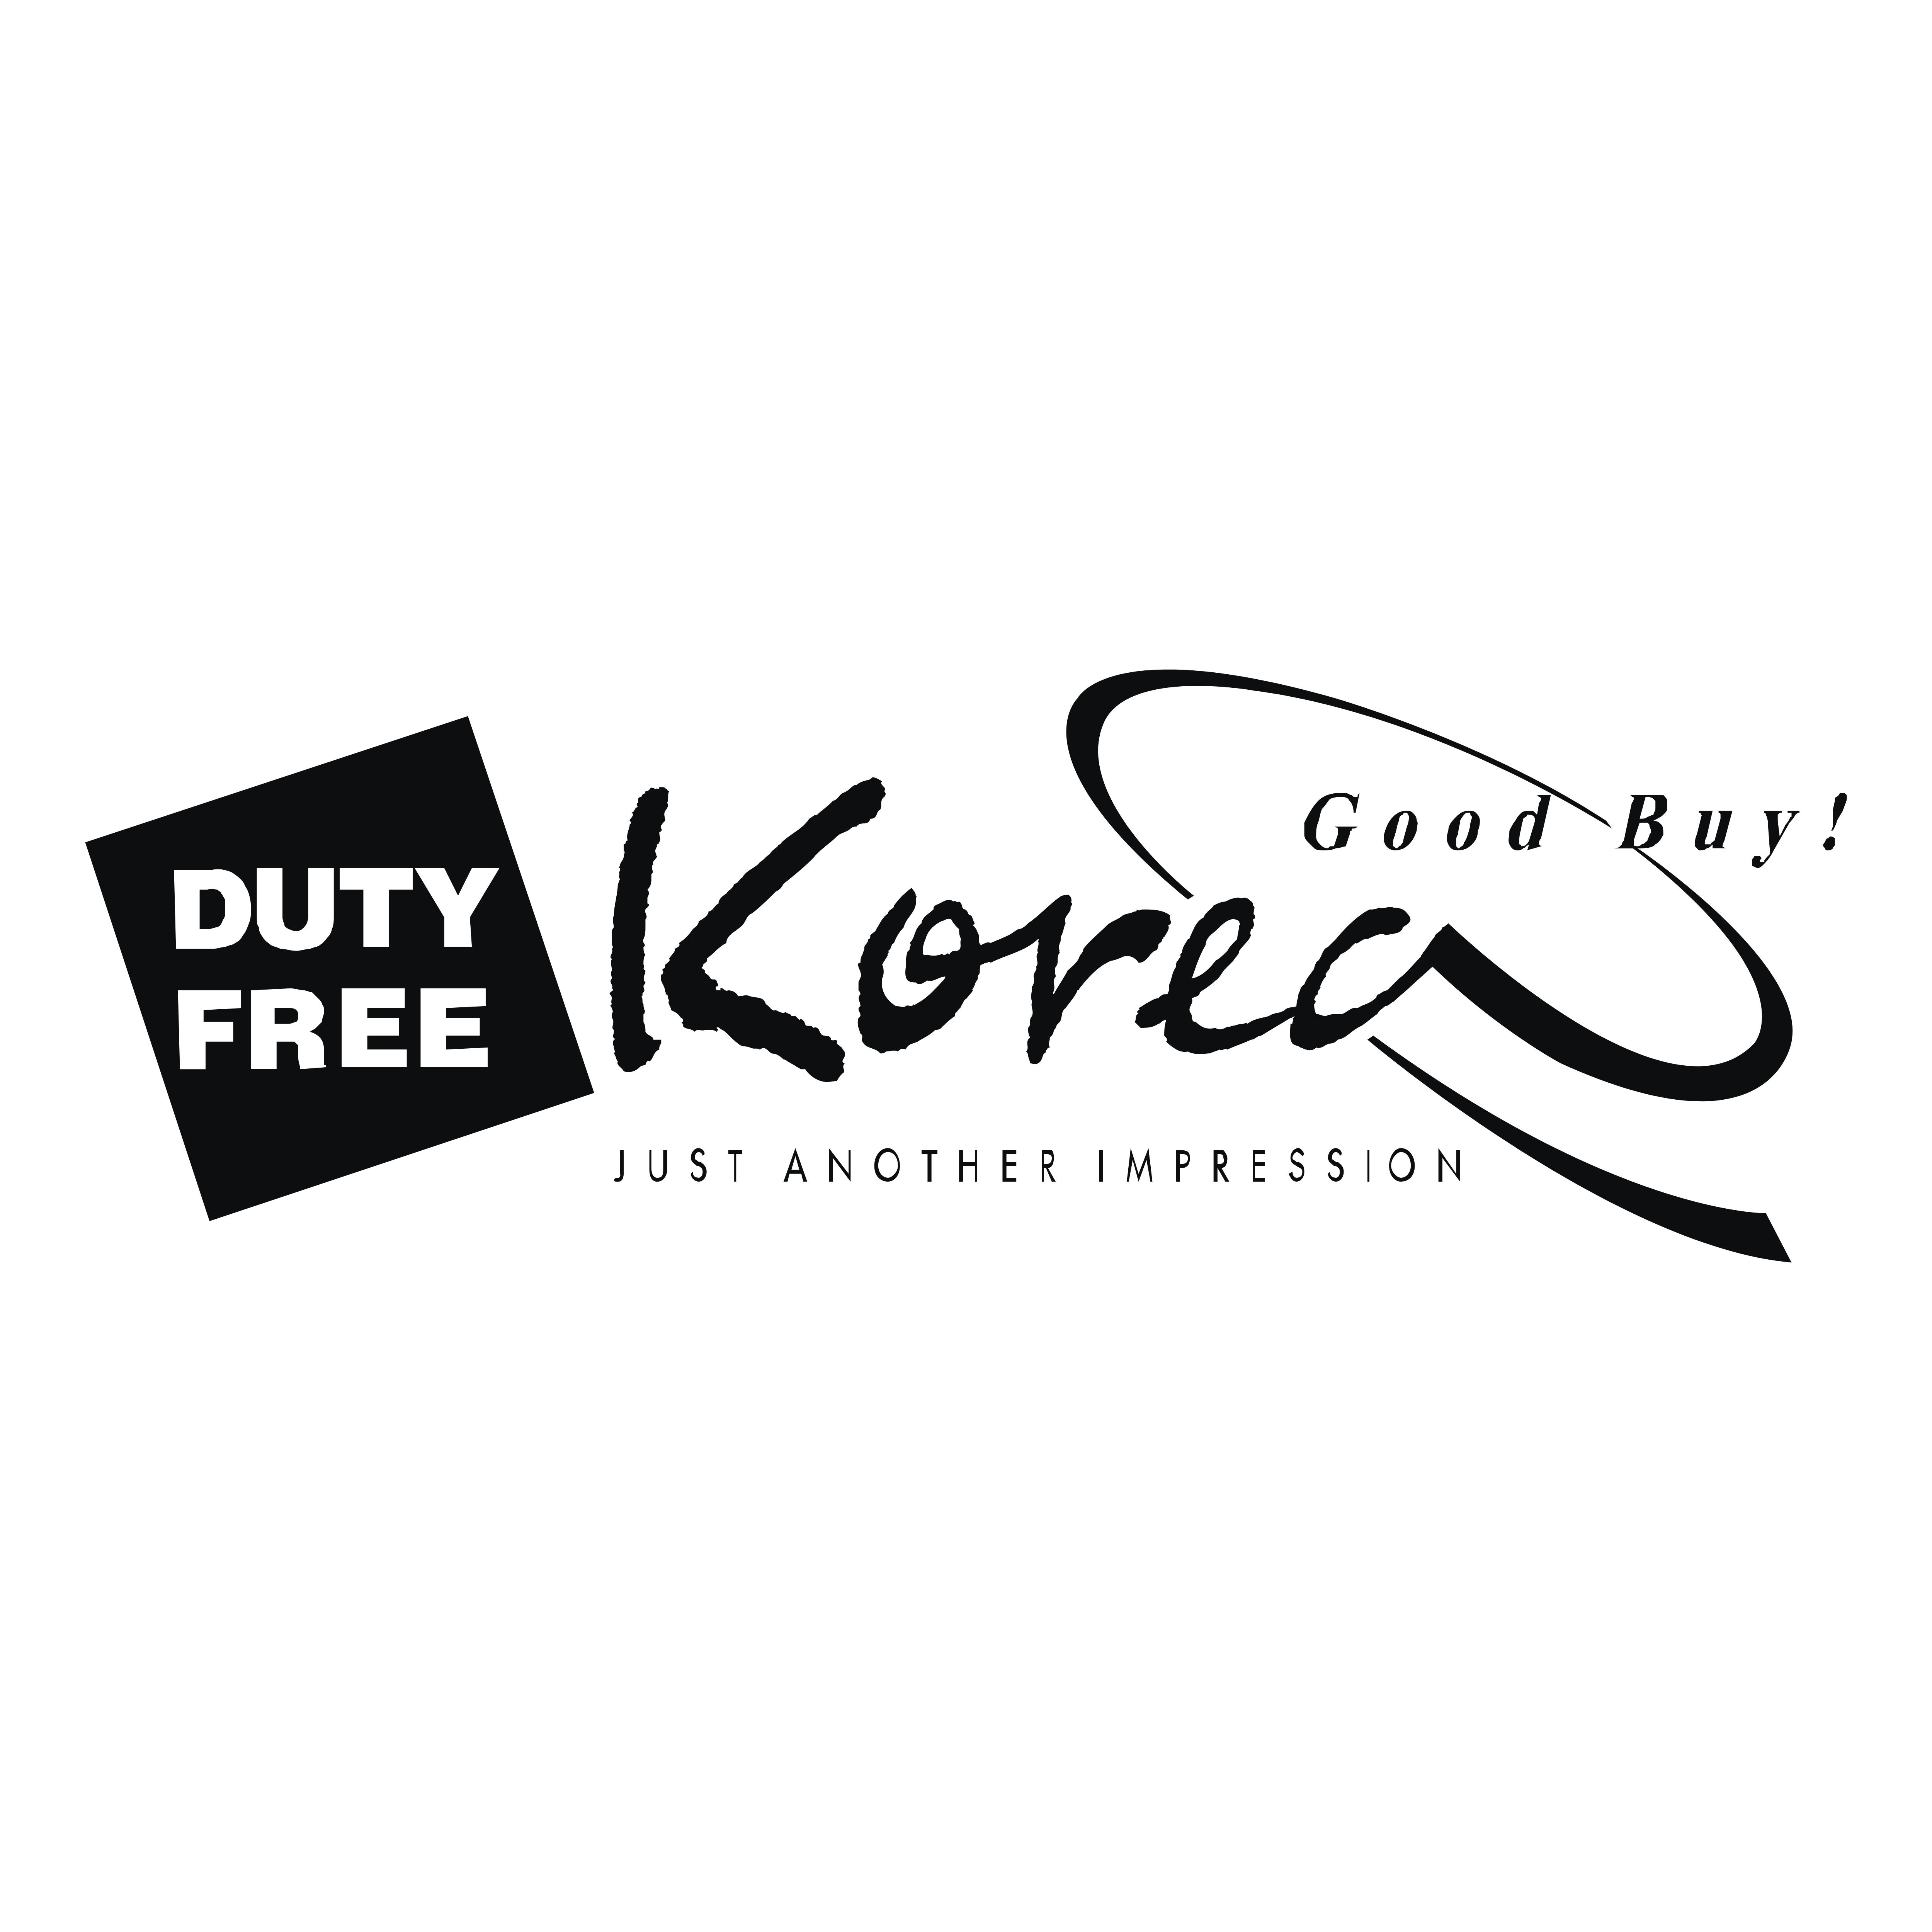  Duty  Free  Logos  Download